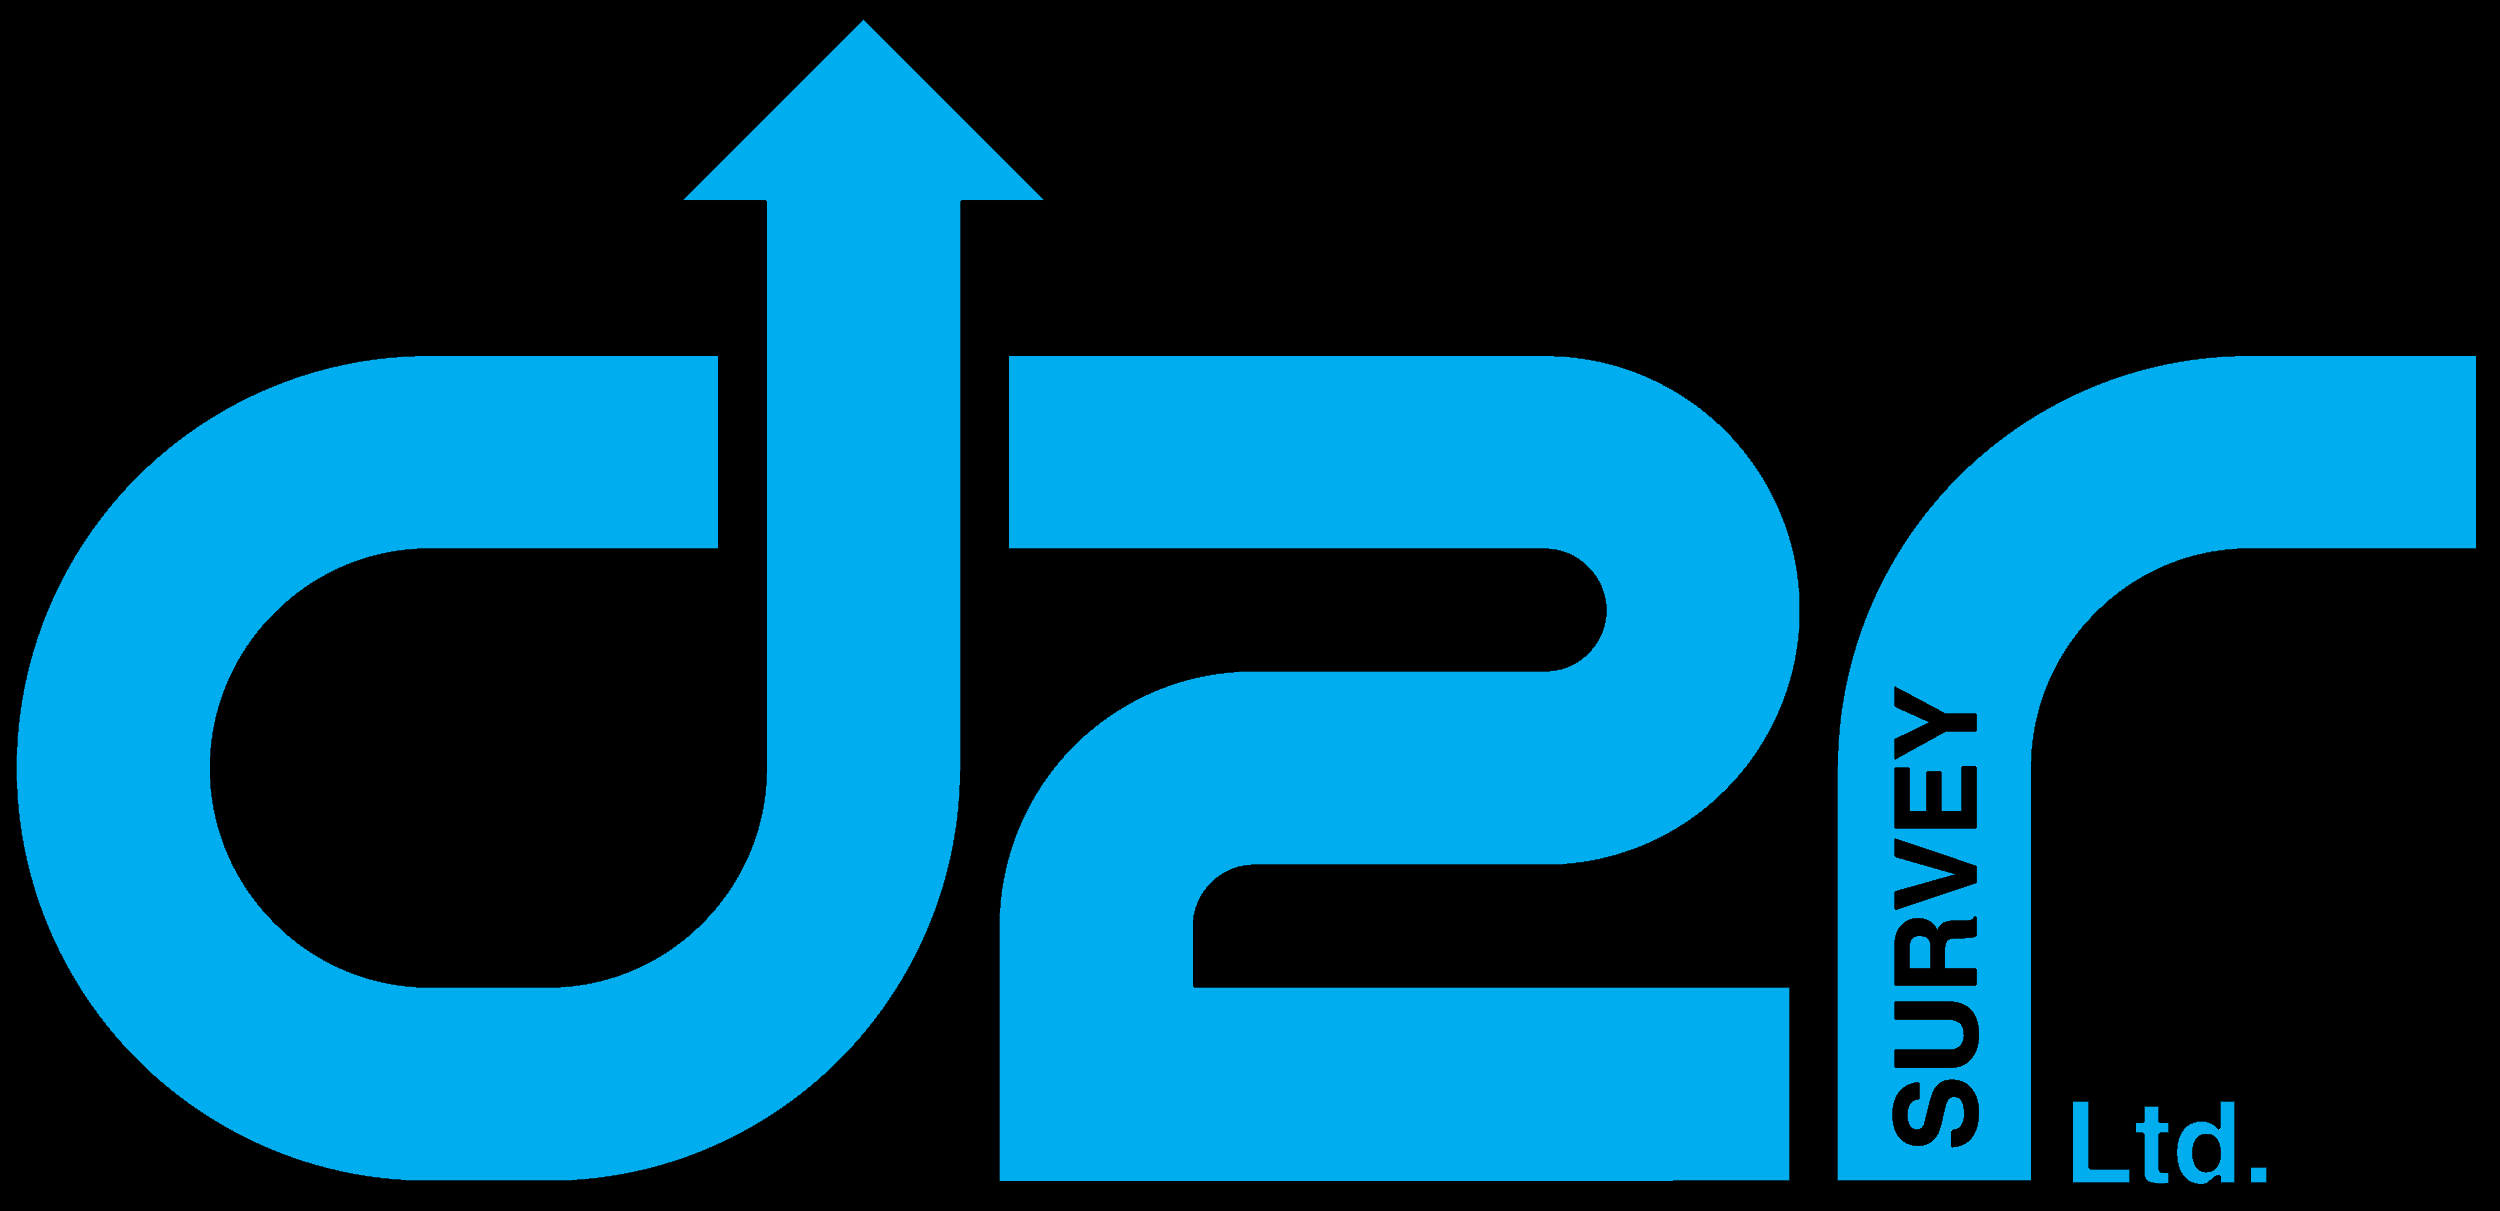 D2R Survey Ltd, Blue logo on Black.